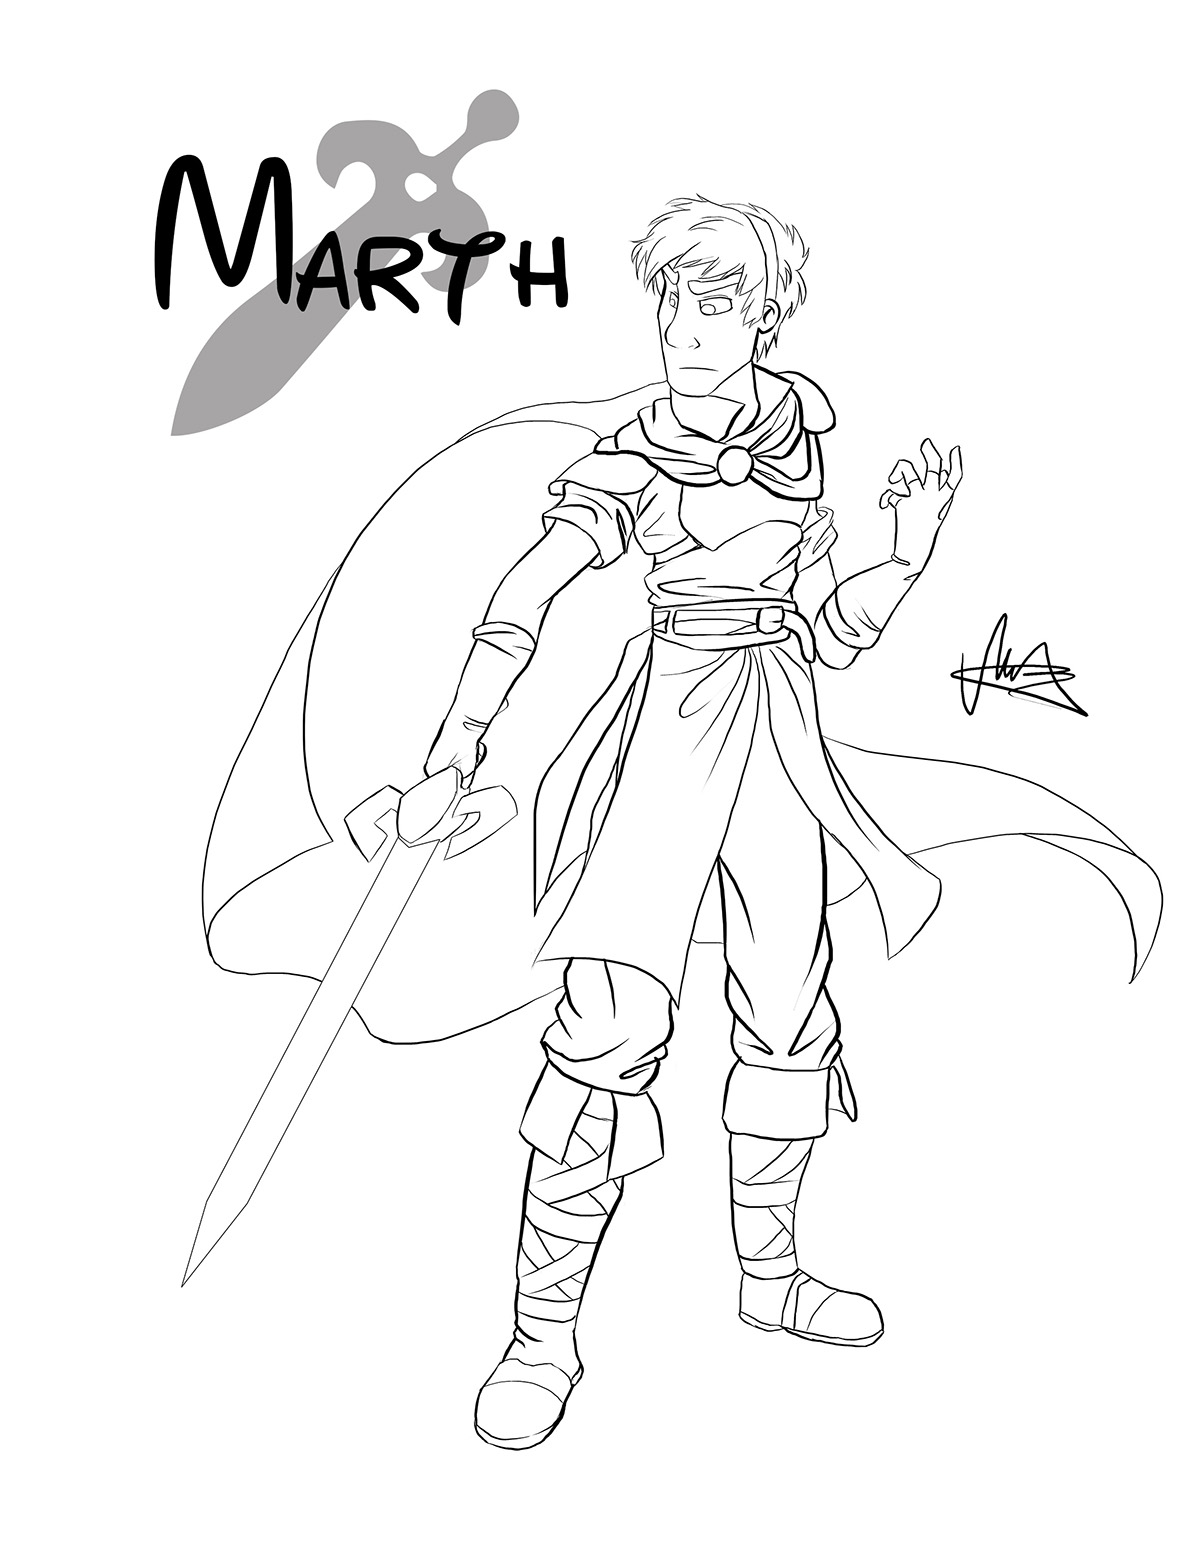 Marth fieremblem Nintendo ilustracion ilustration characters